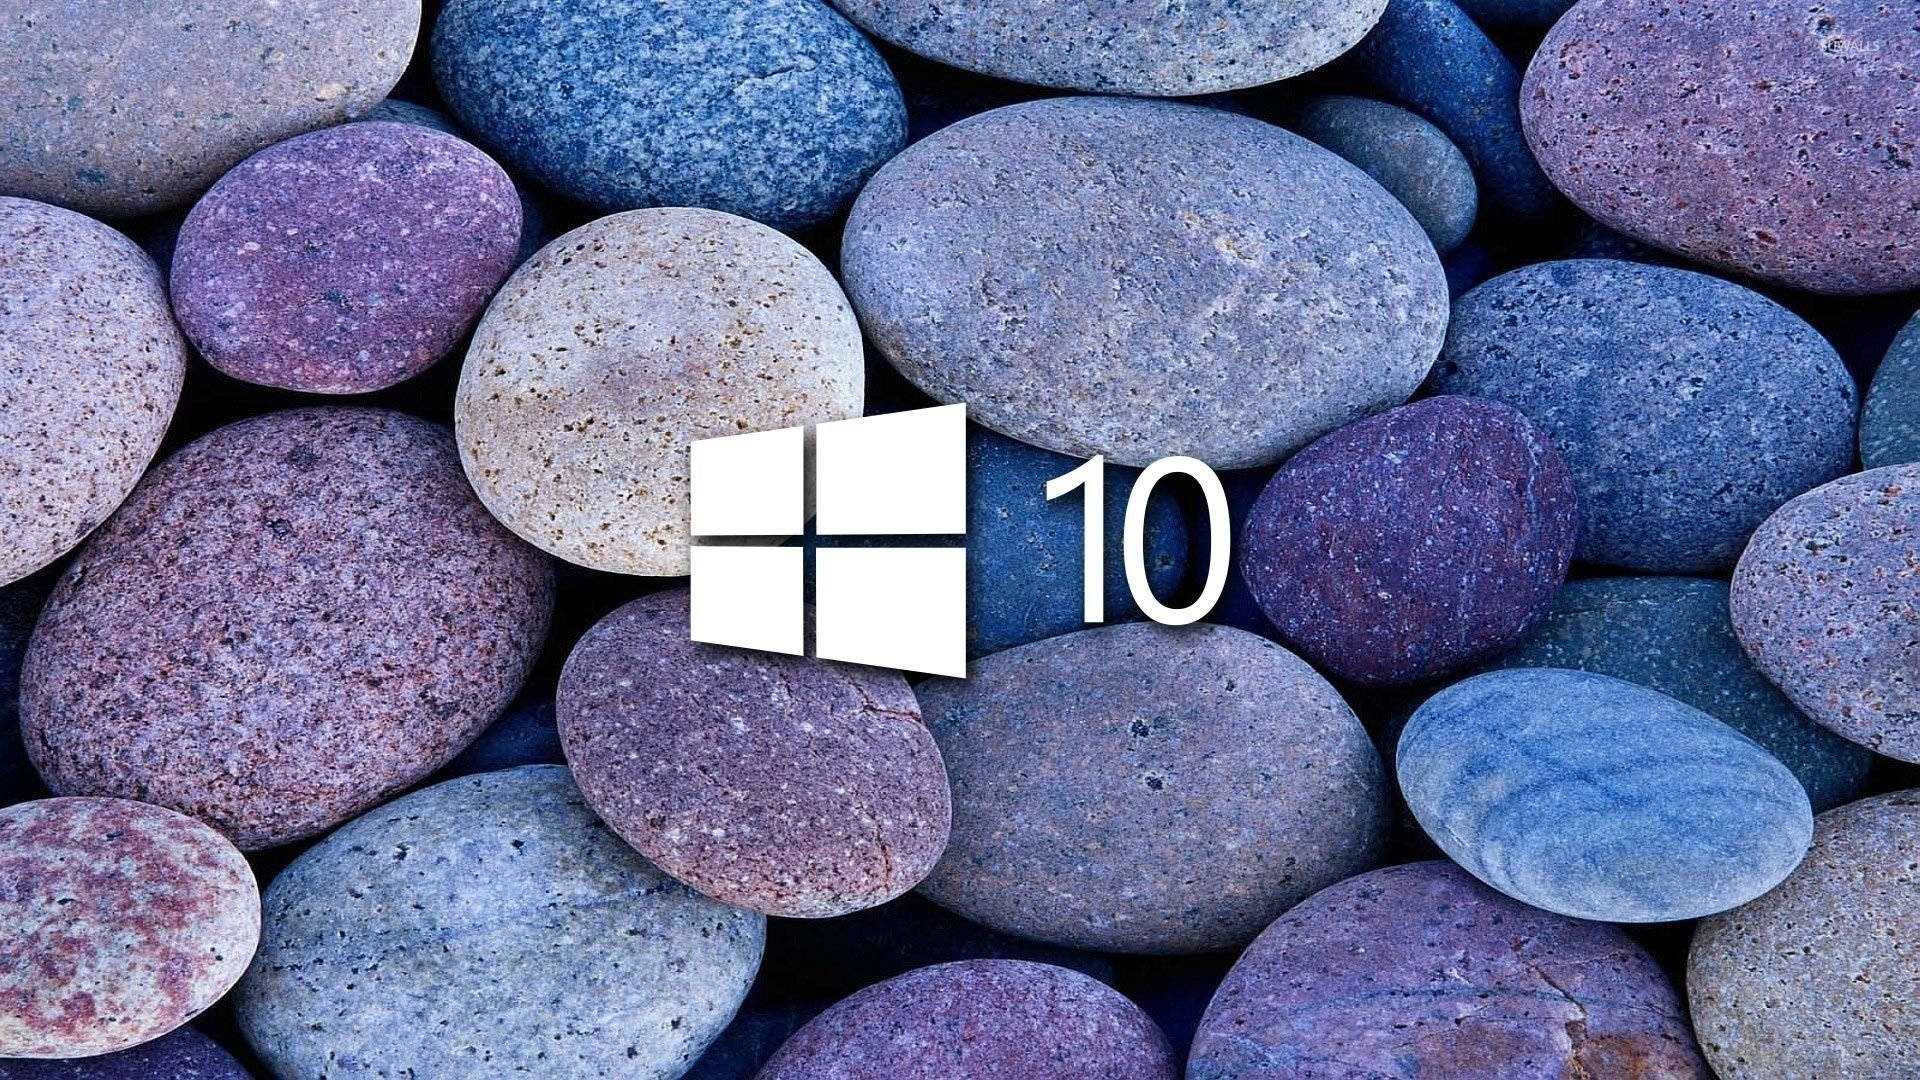 Windows 10 Hd Background Wallpaper